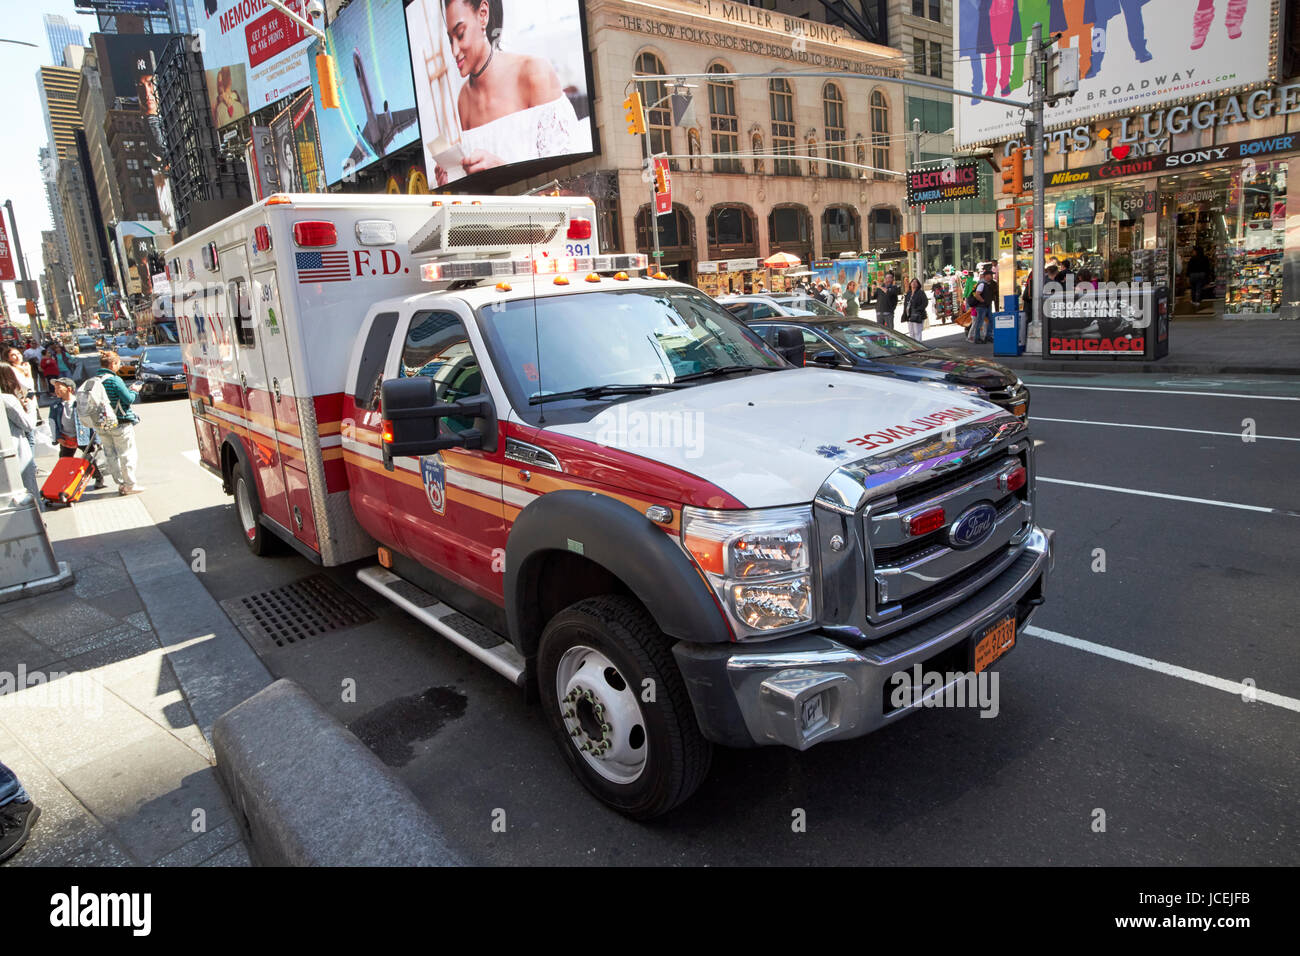 fdny ambulance times square New York City USA Stock Photo